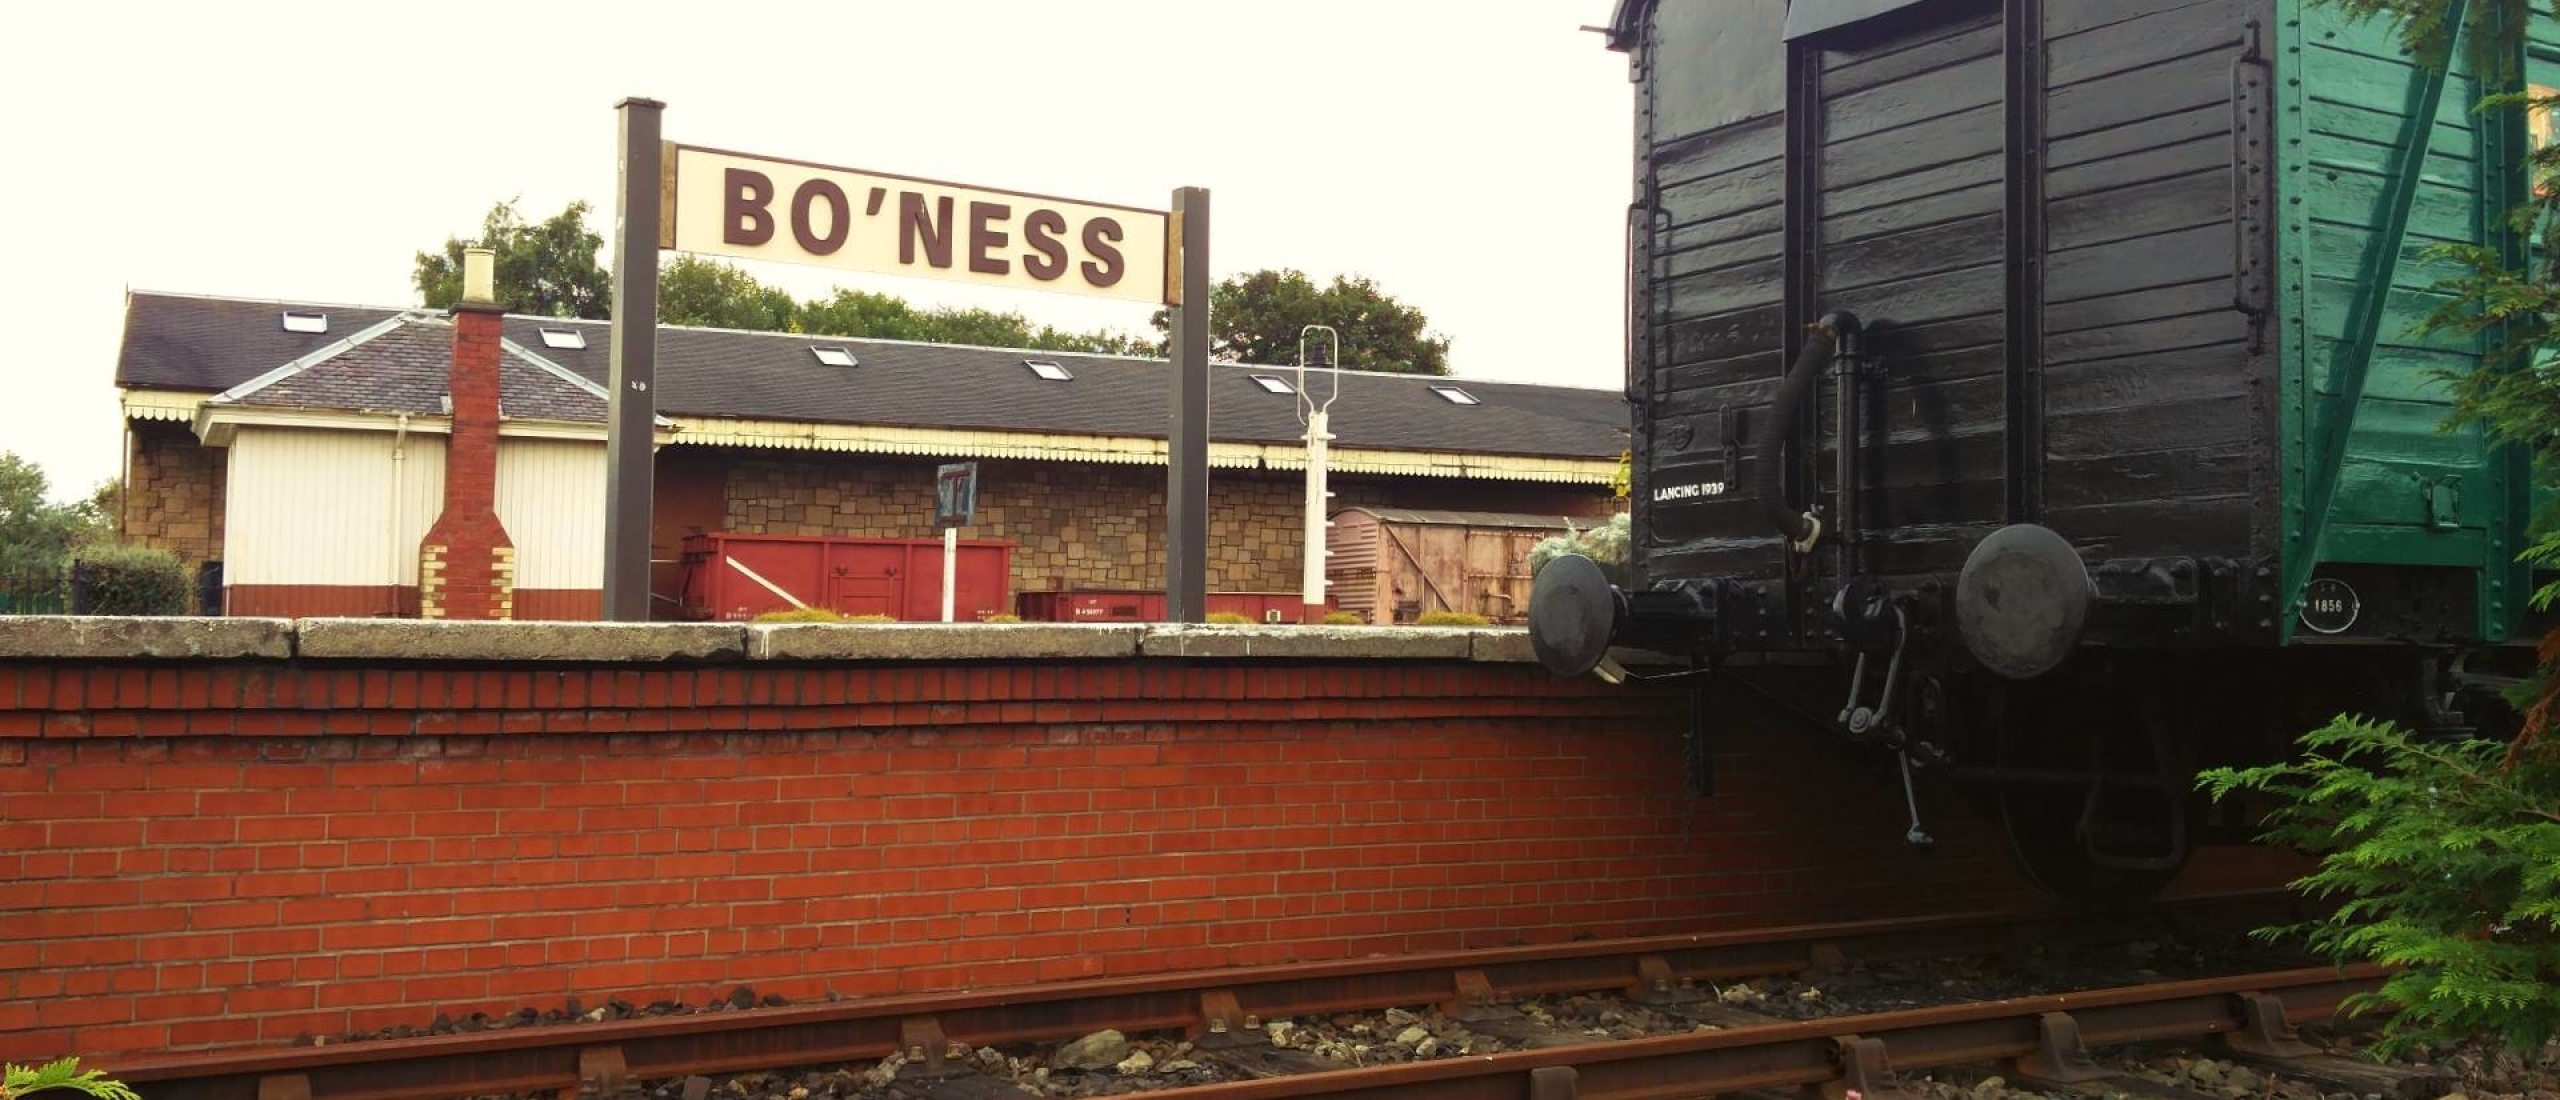 Bo’ness & Kinneil Railway, ontmoet Thomas en Percy